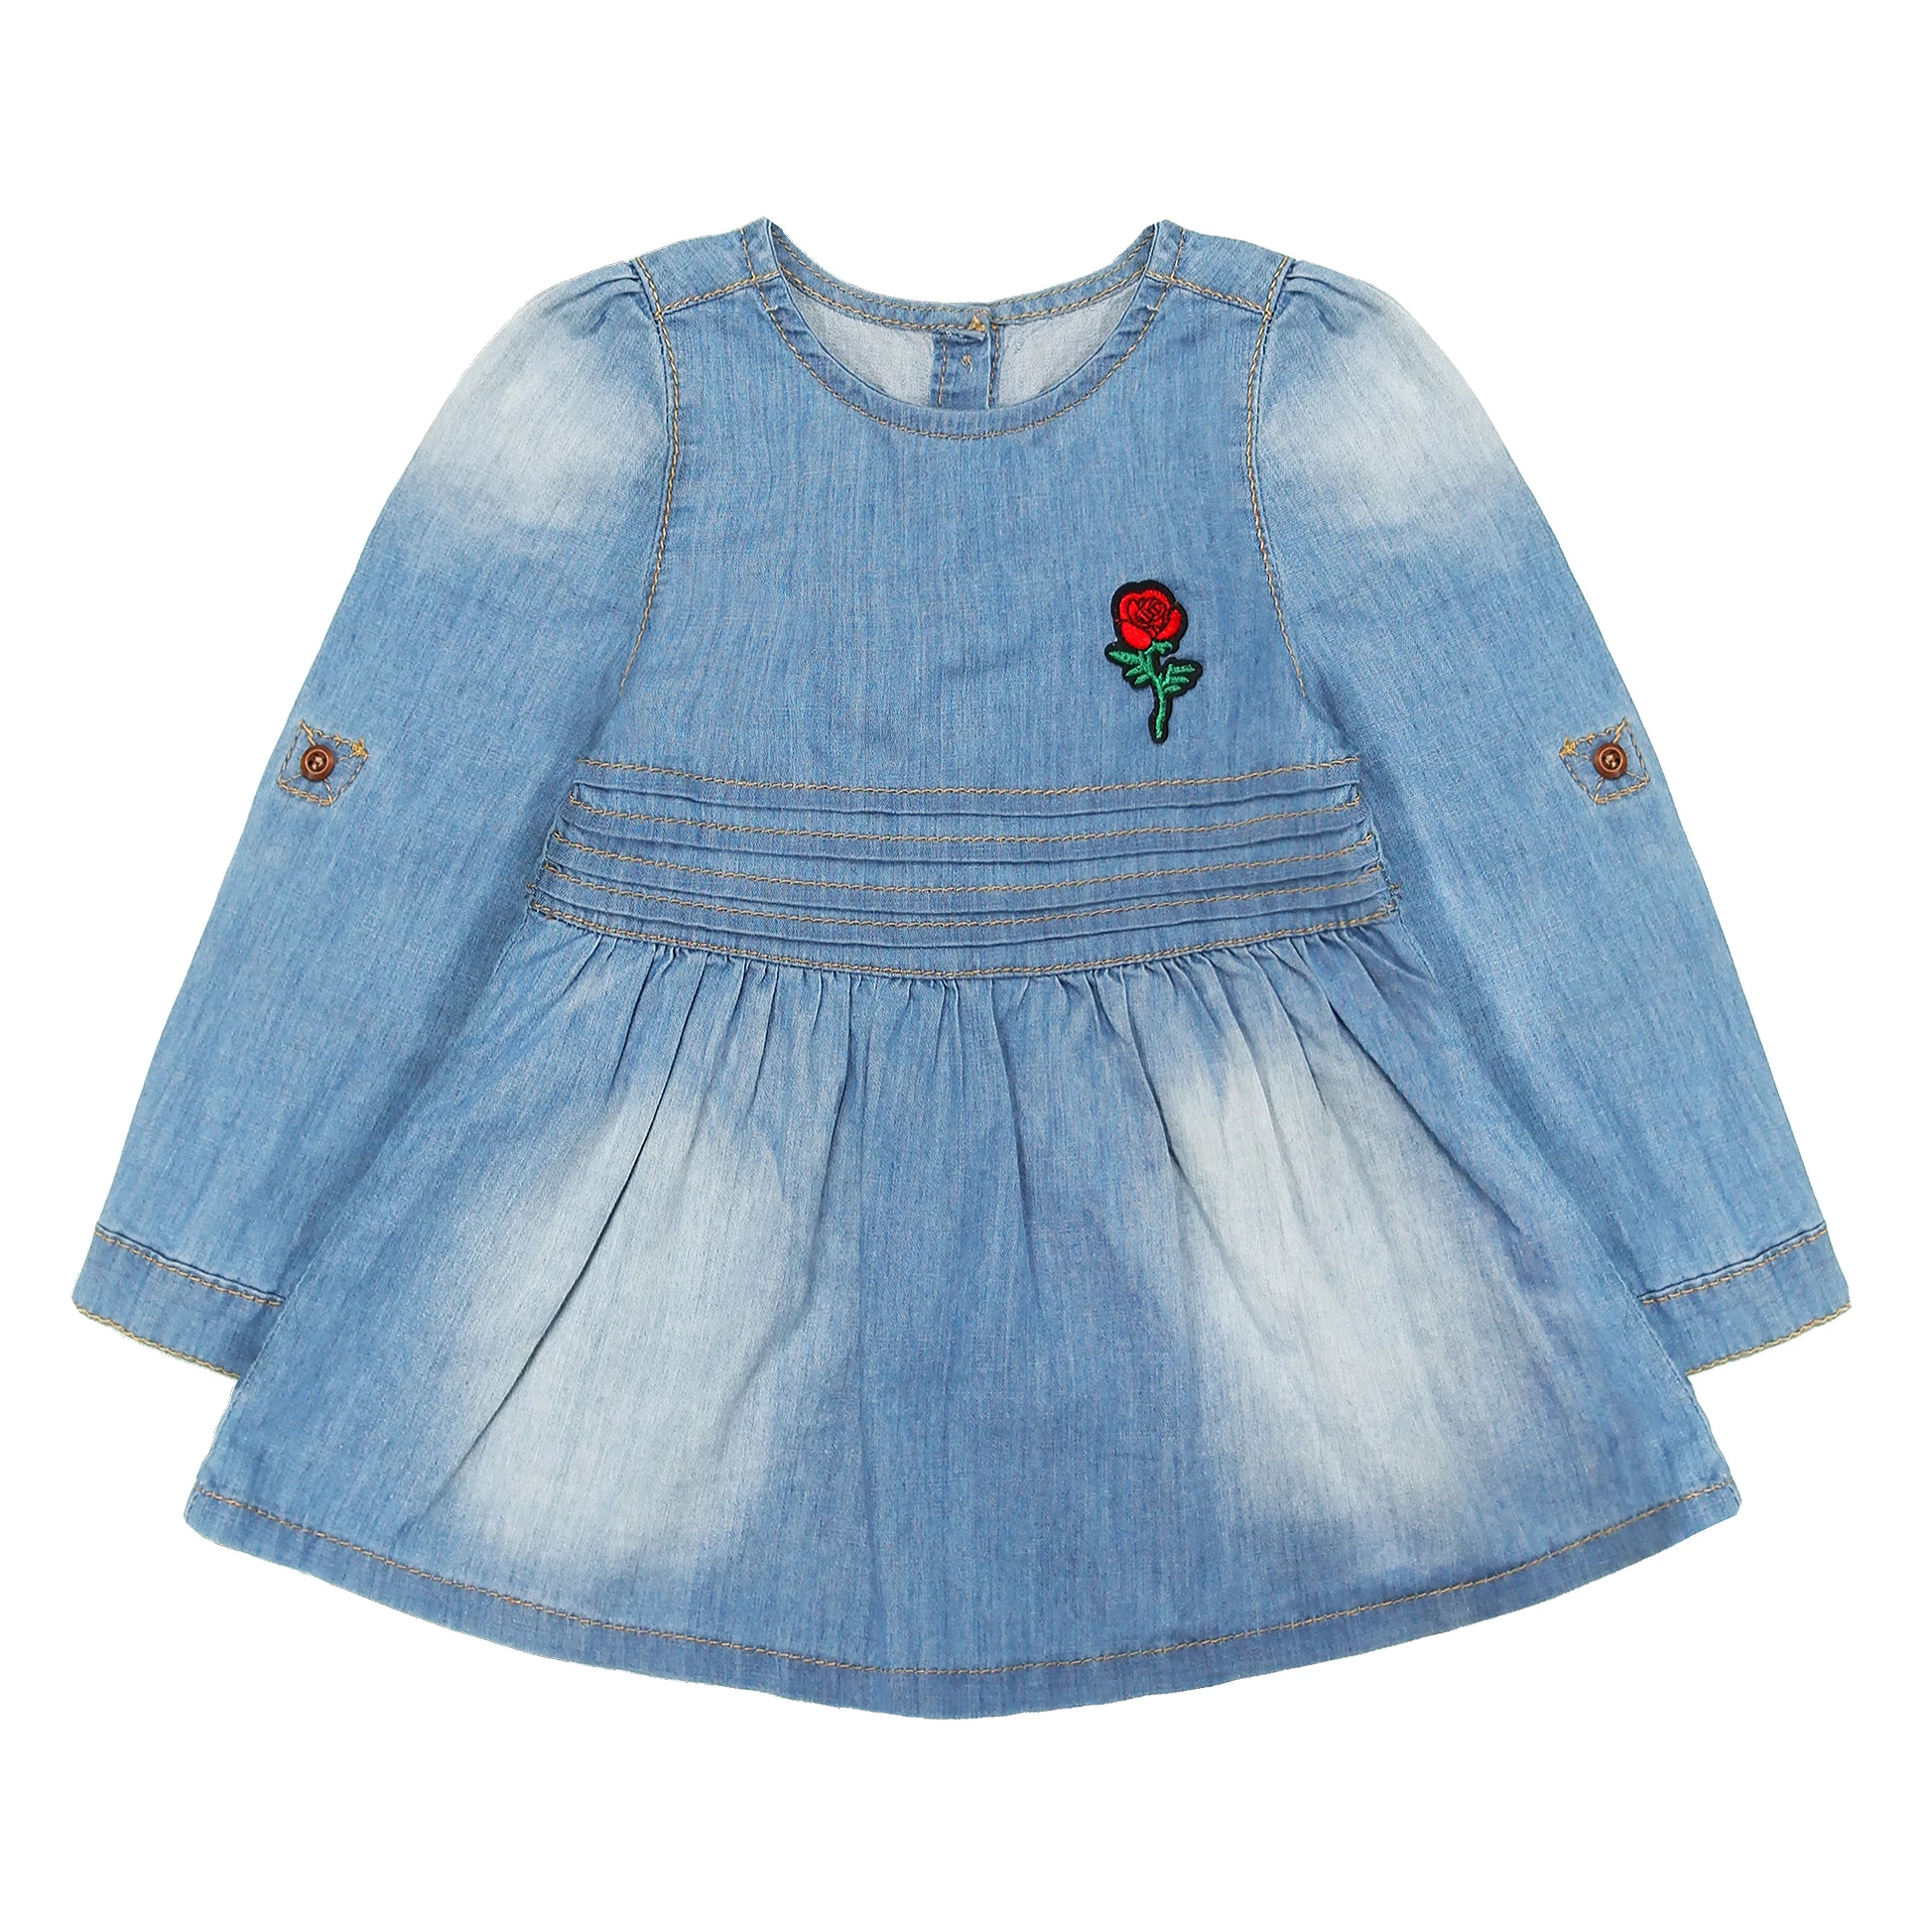 

KIDSCOOL SPACE Baby Little Girl Jean Coat Dress,Flower Bird Embroidered Pleated Denim Shirt